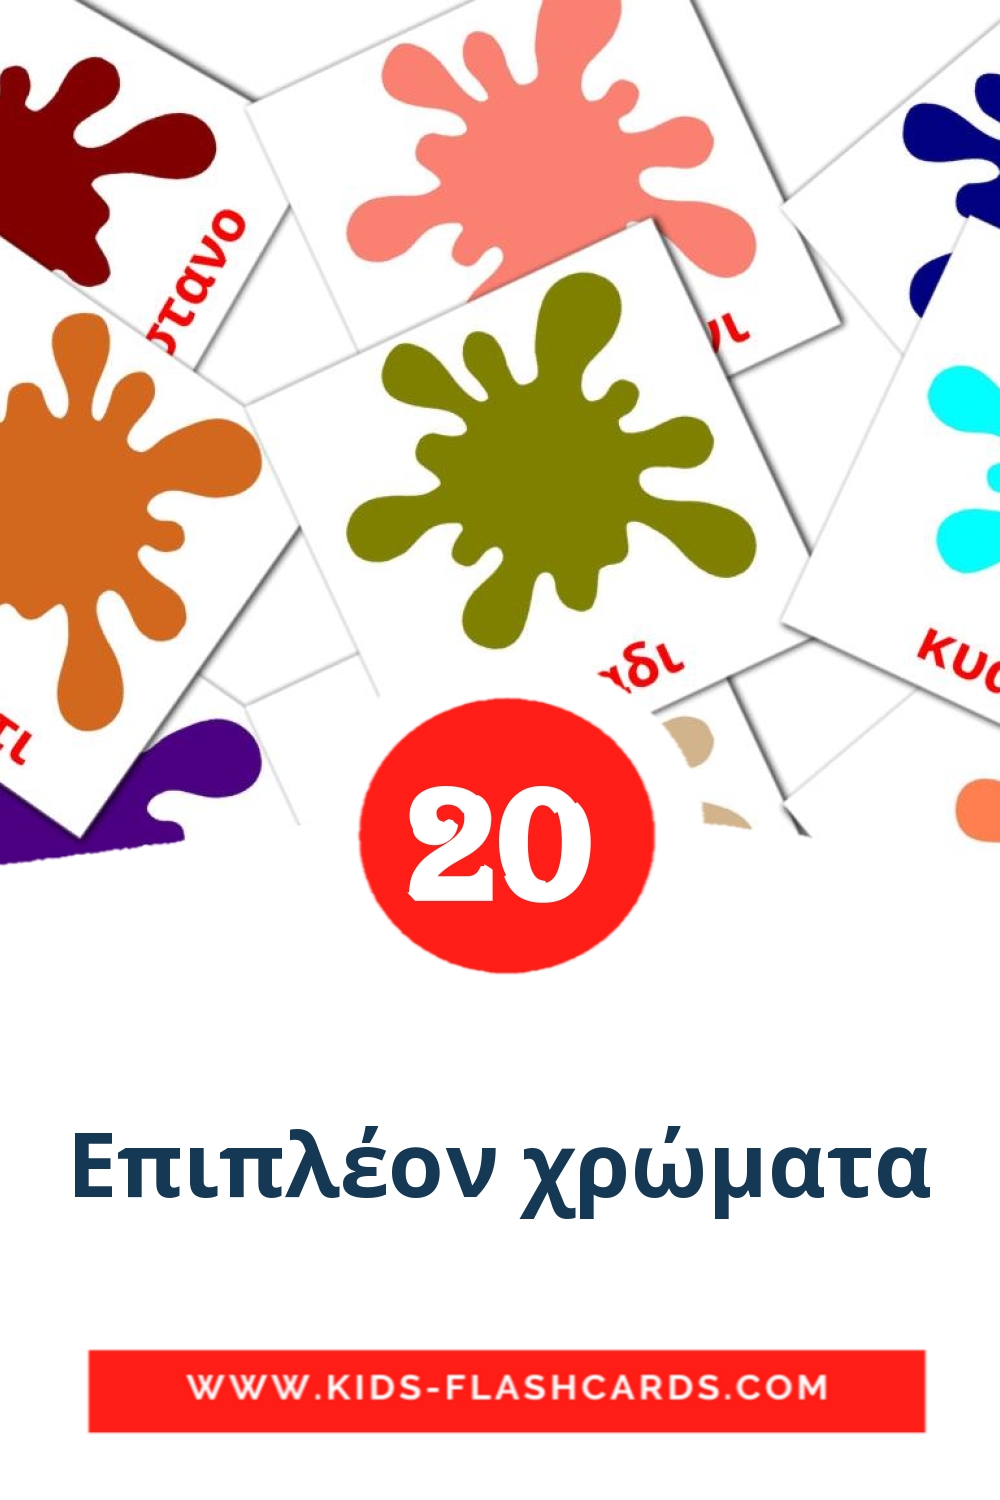 20 carte illustrate di Επιπλέον χρώματα per la scuola materna in greco